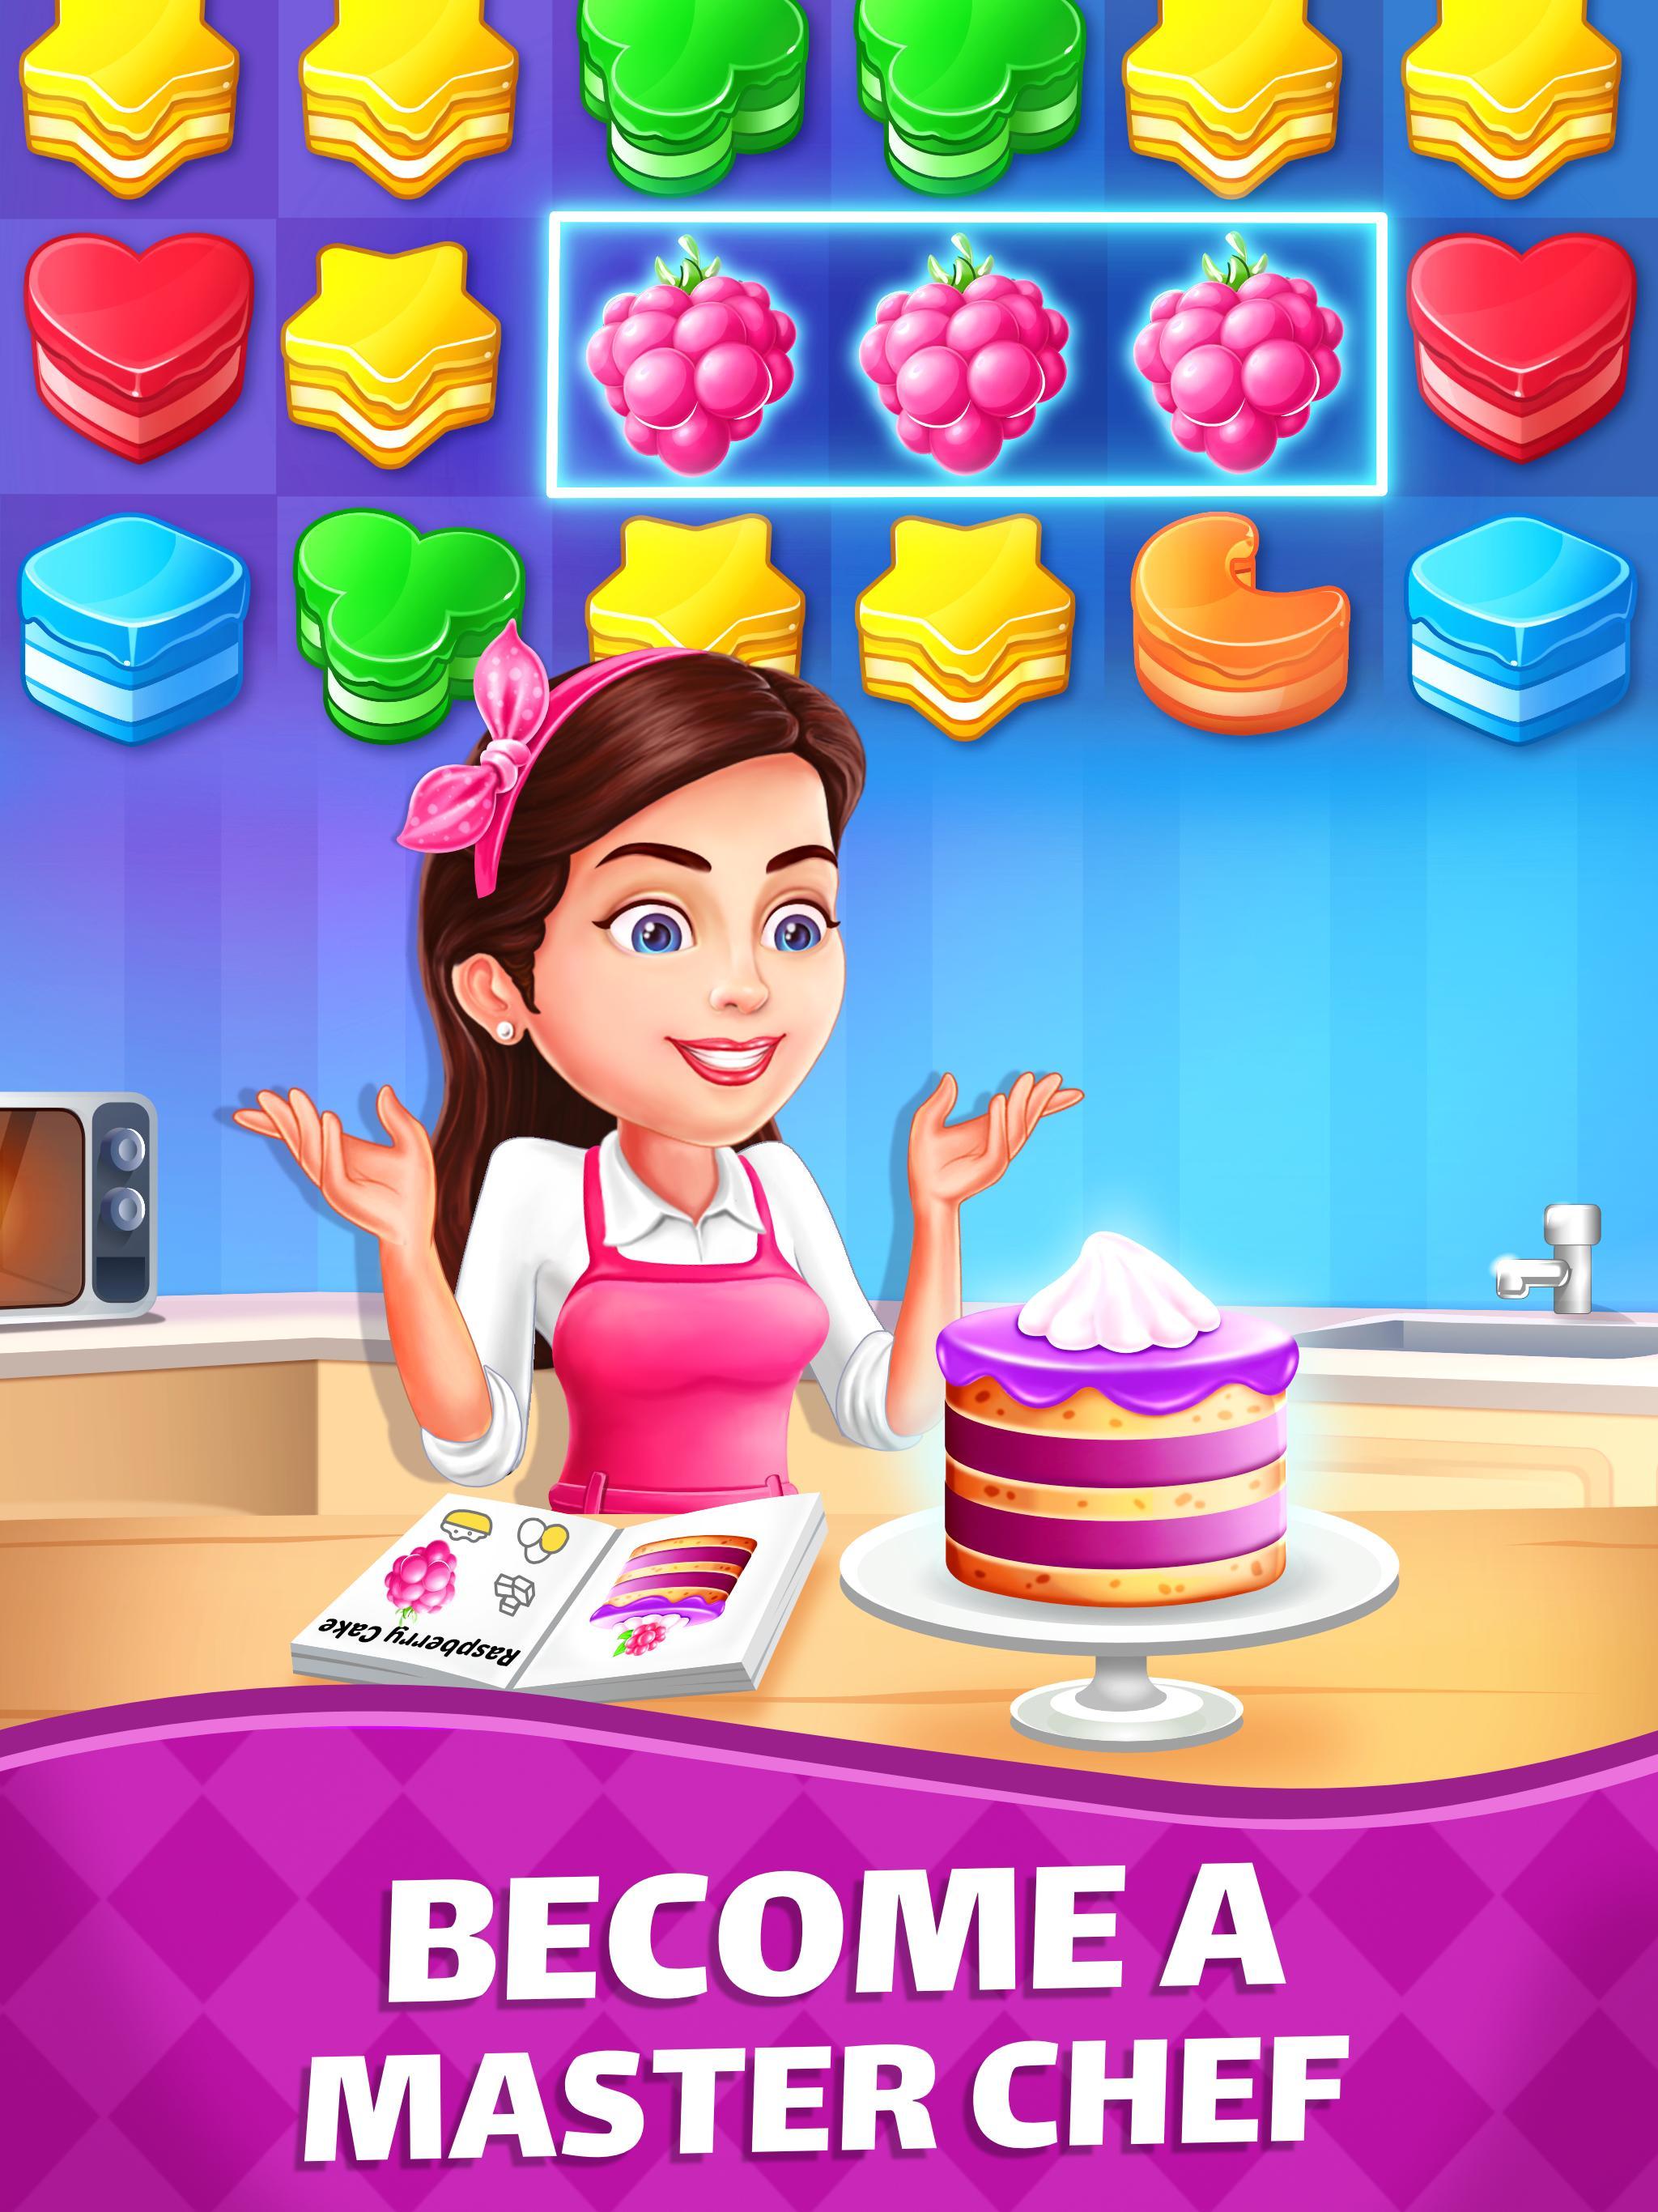 Cake Blast 🎂 - Match 3 Puzzle Game 🍰 1.0.6 Screenshot 16